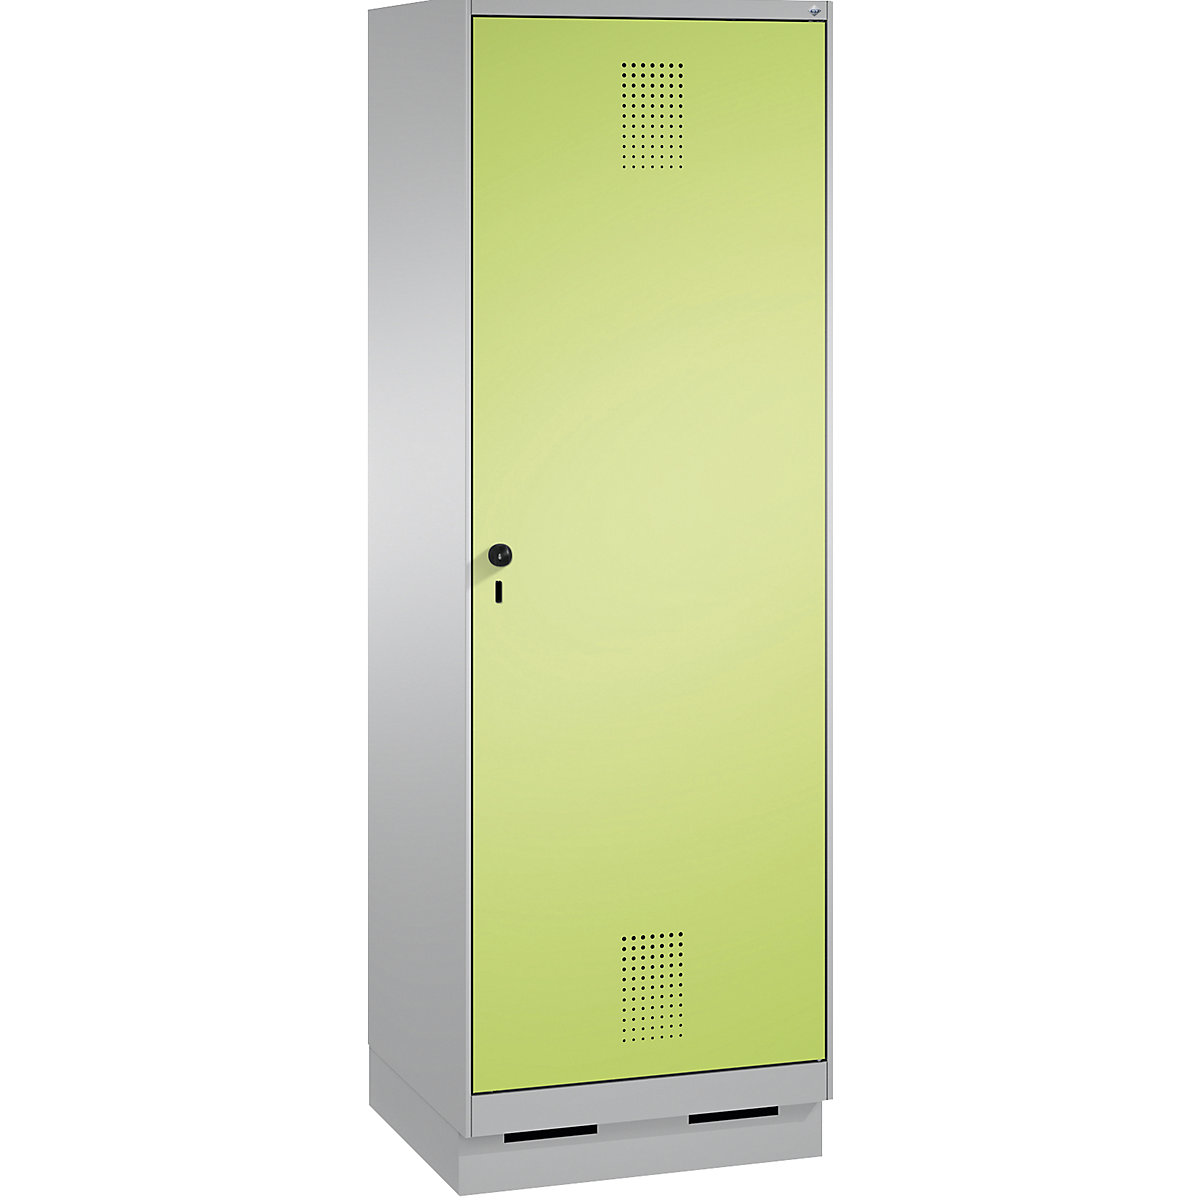 EVOLO Garderobenschrank, Tür über 2 Abteile, mit Sockel C+P, 2 Abteile, 1 Tür, Abteilbreite 300 mm, weißaluminium / viridingrün-11